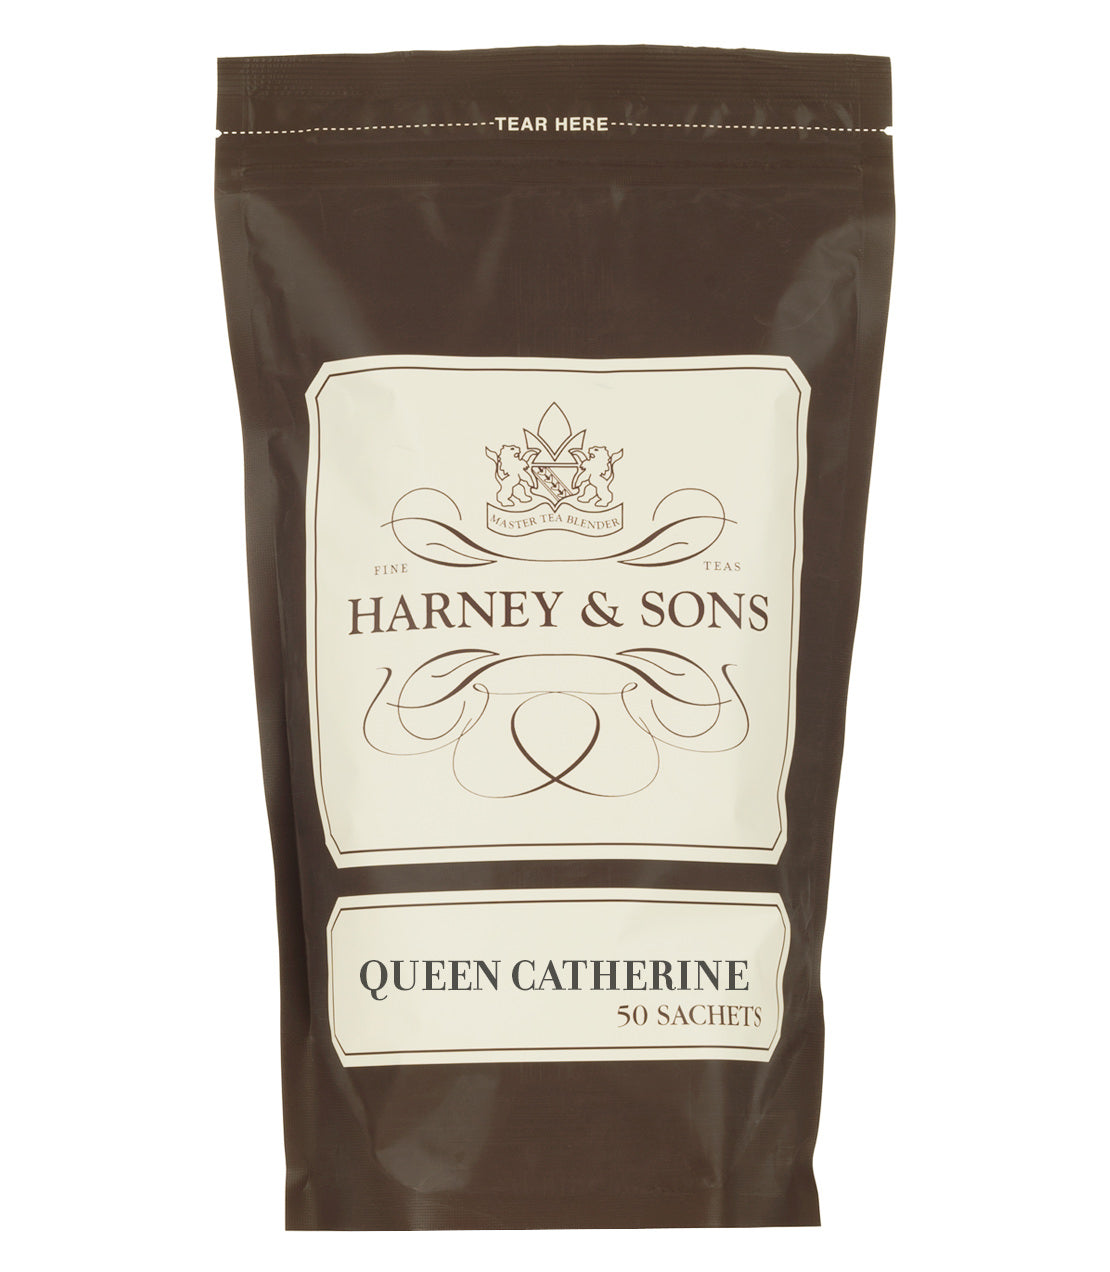 Queen Catherine - Sachets Bag of 50 Sachets - Harney & Sons Fine Teas